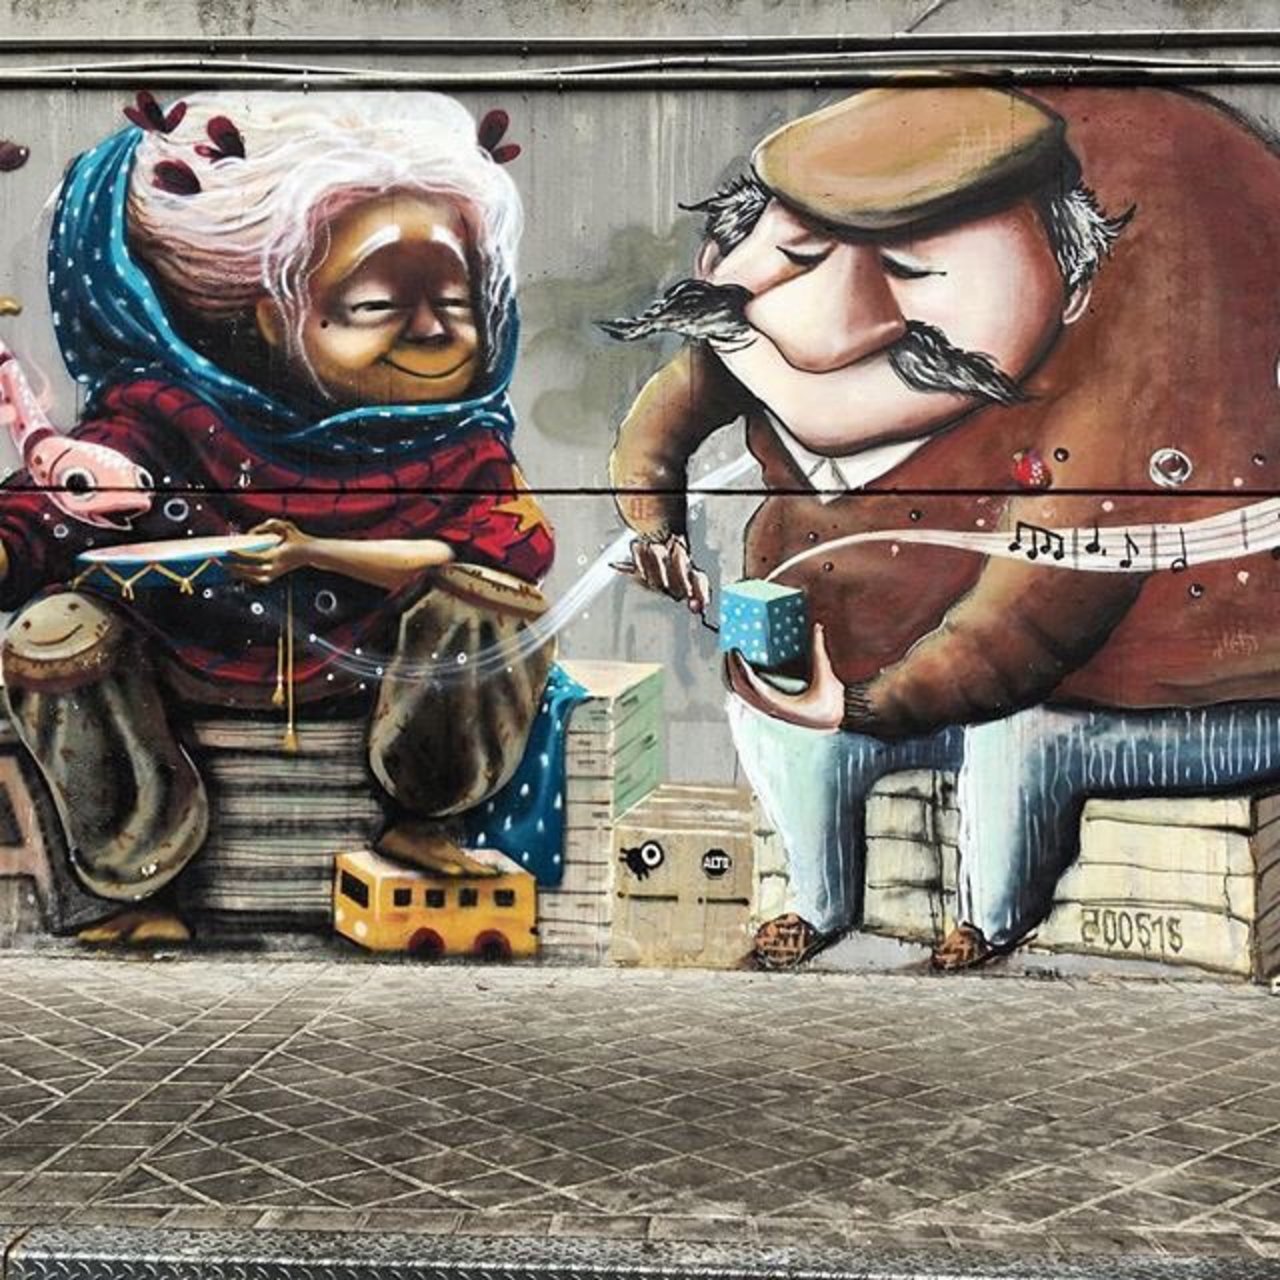 Life is a music box (Madrid, Moratalaz) #Graffiti #designthinking #StreetArt https://t.co/C8QmggoBSf